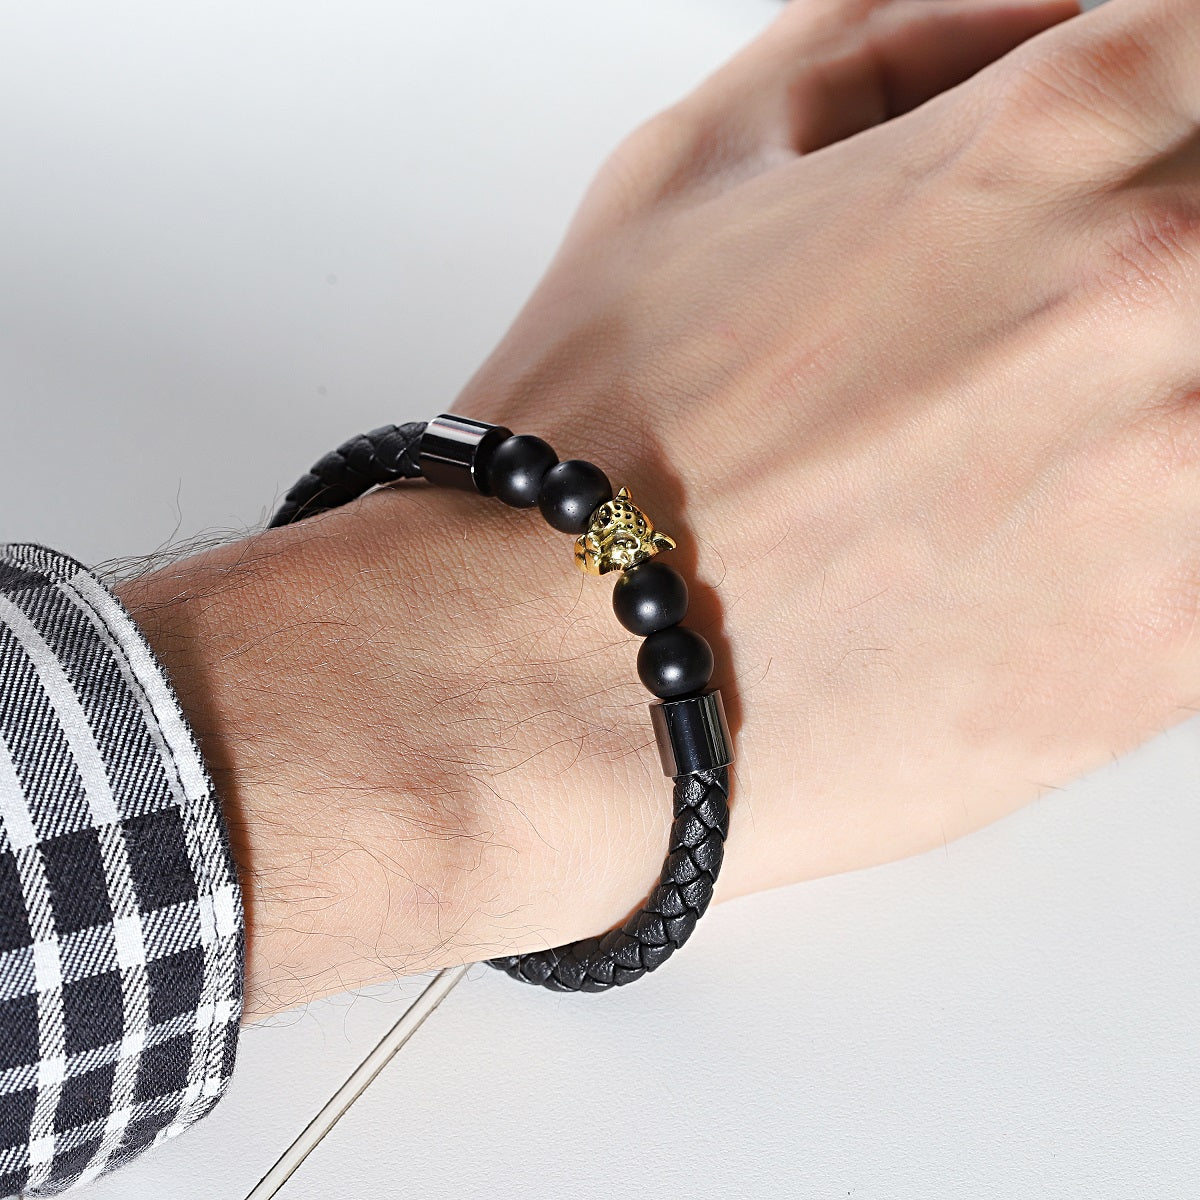 A stylish bracelet featuring sleek black jet beads and a jaguar charm on a leather strap.